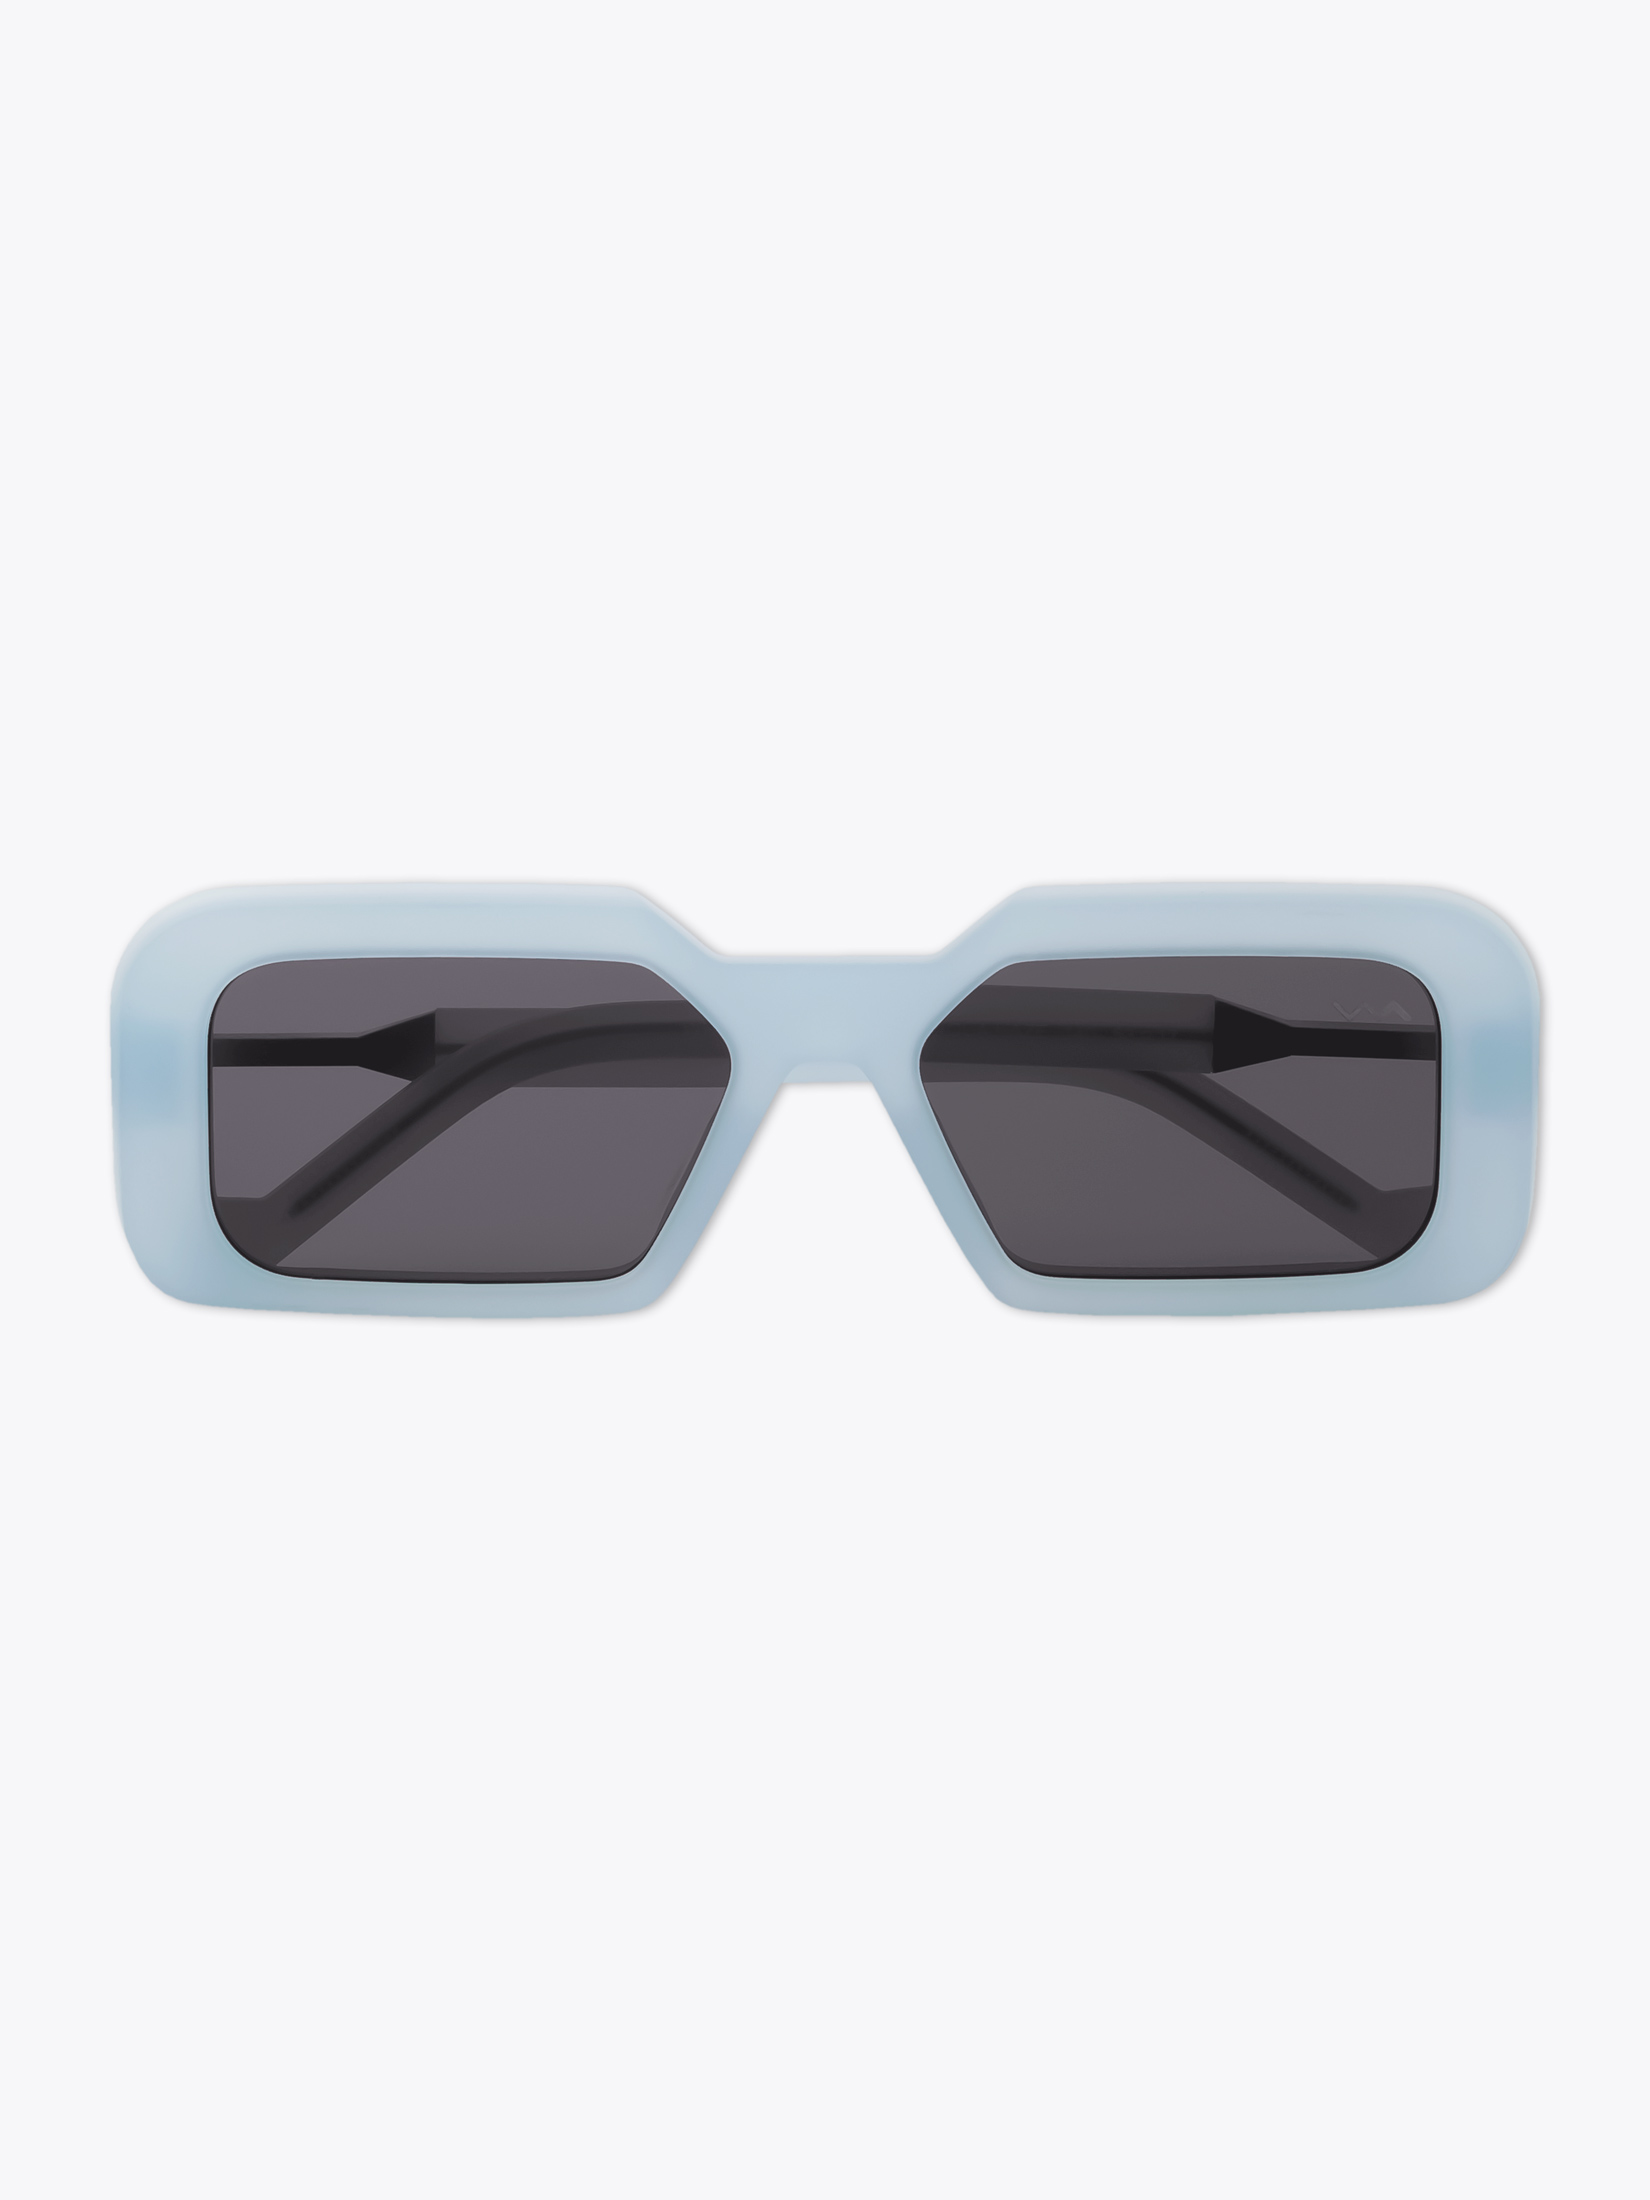 50% Off Vava Eyewear Sunglasses - WL0053 Aqua Haze - E35 Shop